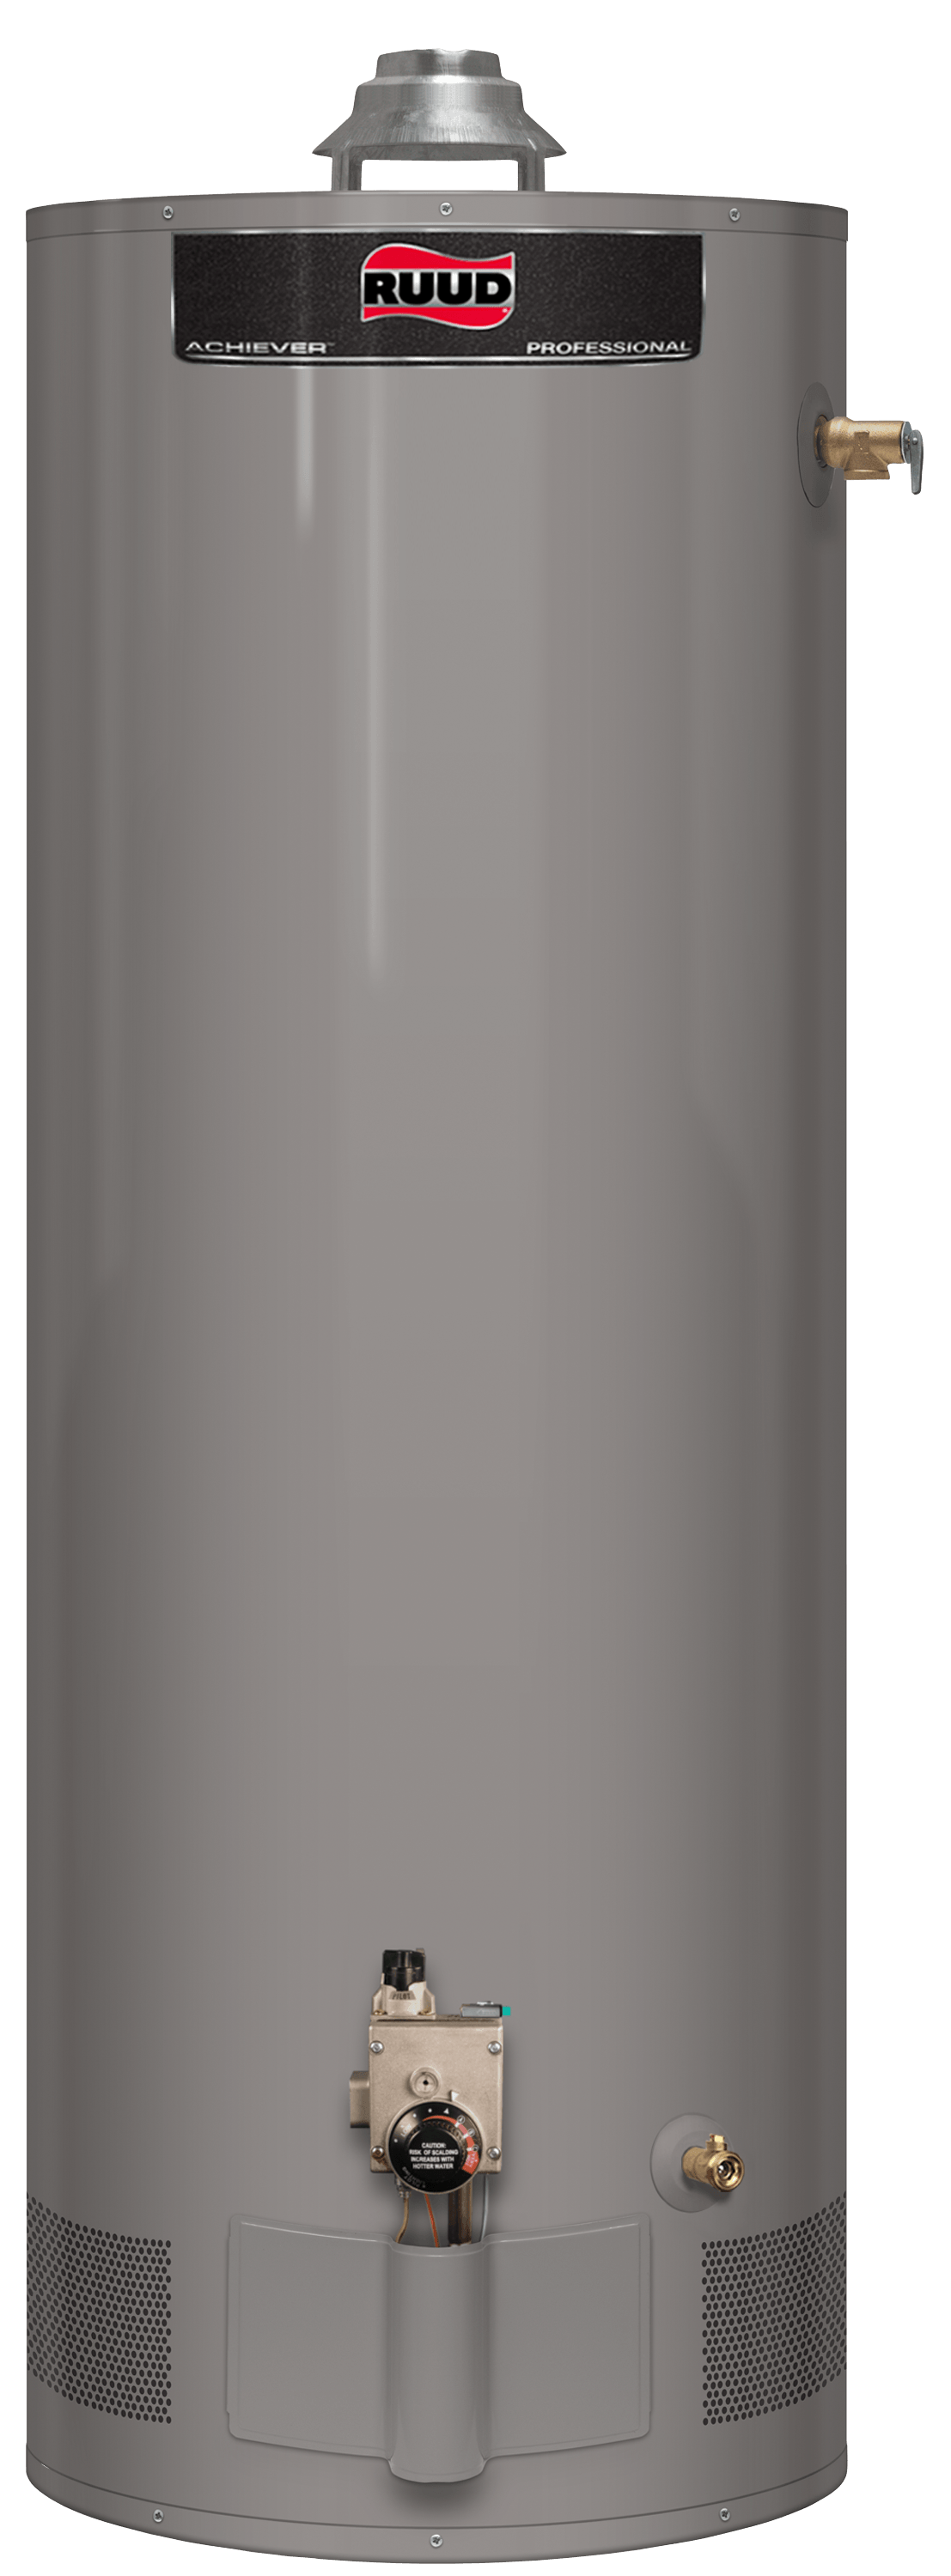 Ruud residential standard atmospheric water heater, Calentador de agua atmosférico